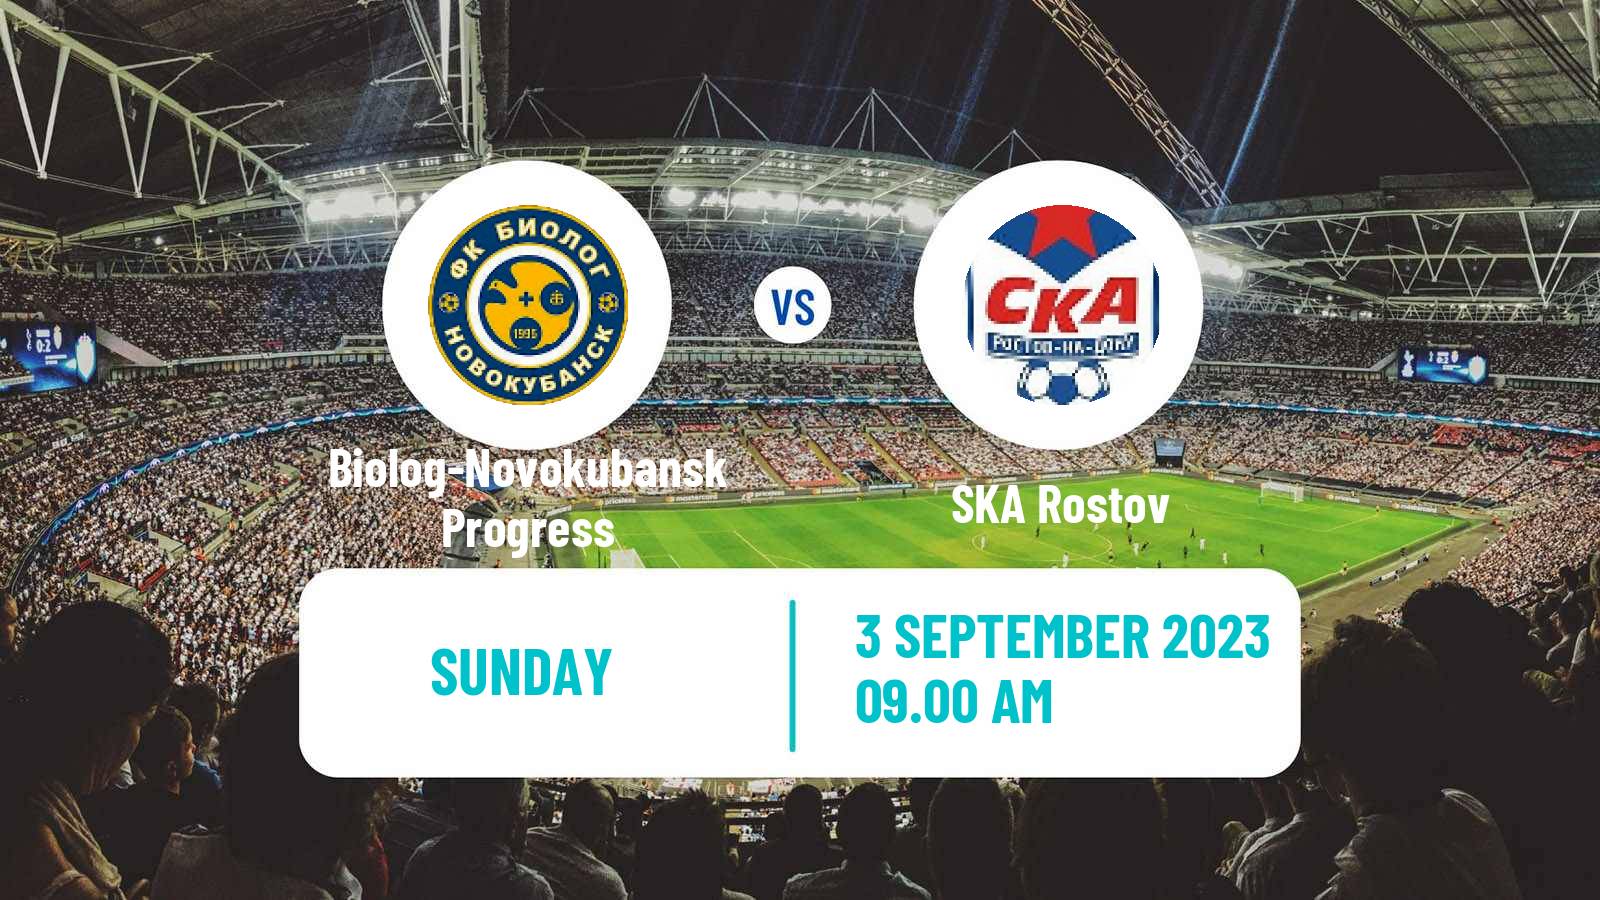 Soccer FNL 2 Division B Group 1 Biolog-Novokubansk Progress - SKA Rostov